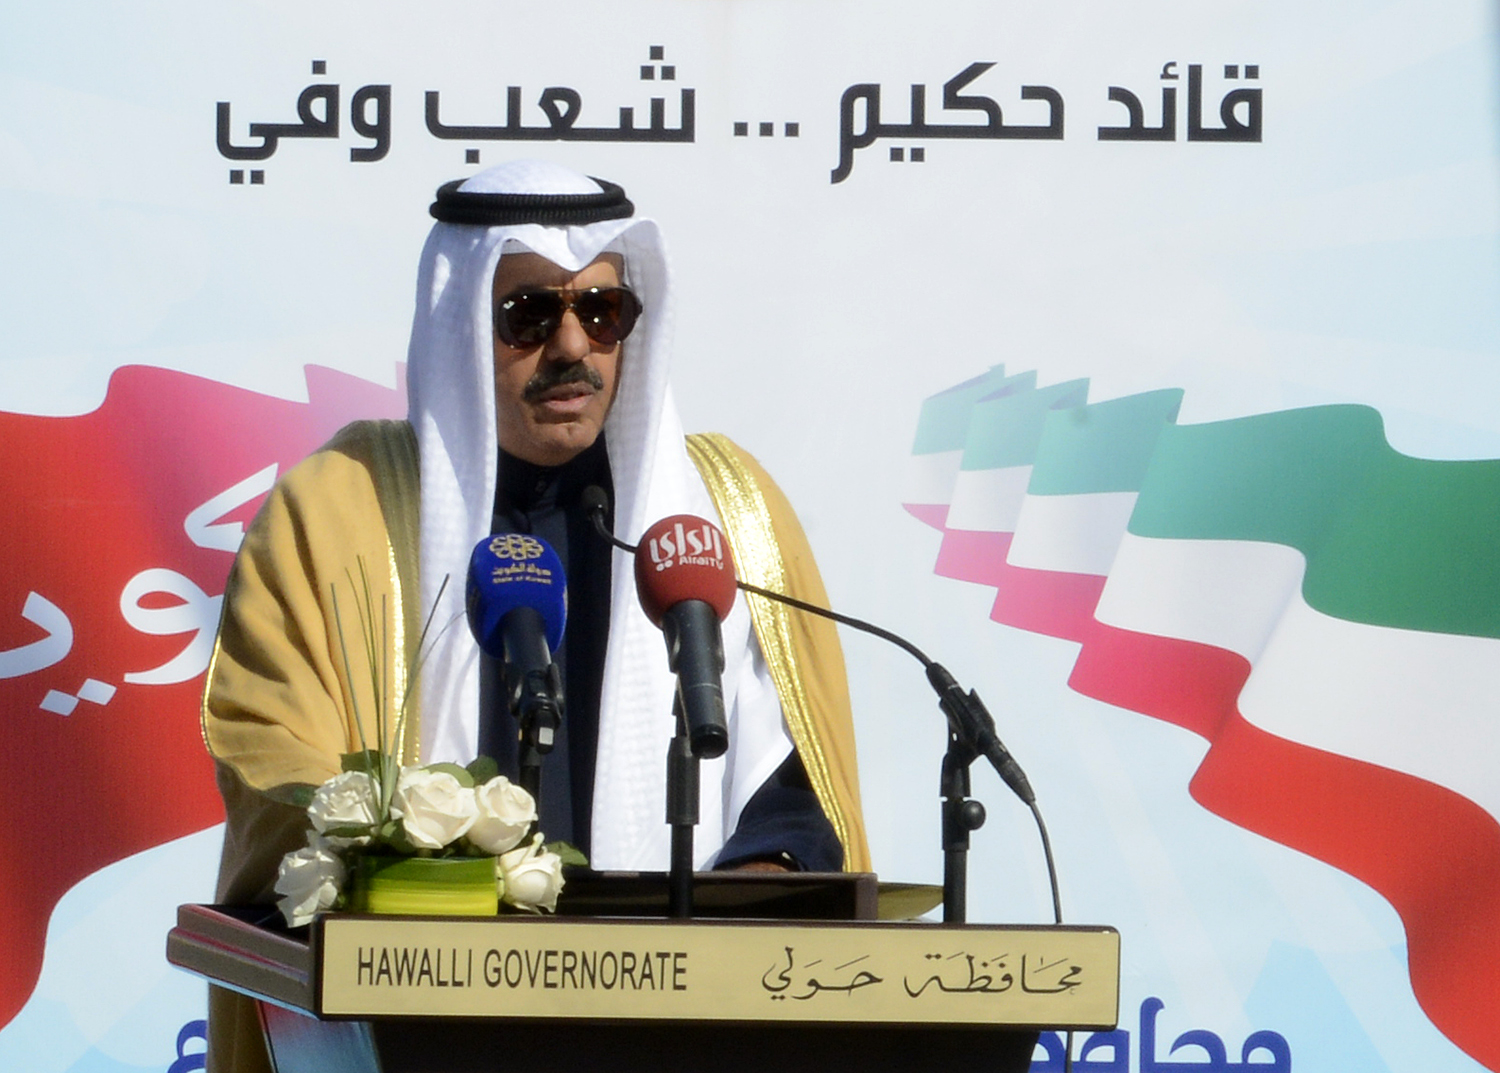 Hawally's governor Lieutenant General Sheikh Ahmad Al-Nawaf Al-Sabah